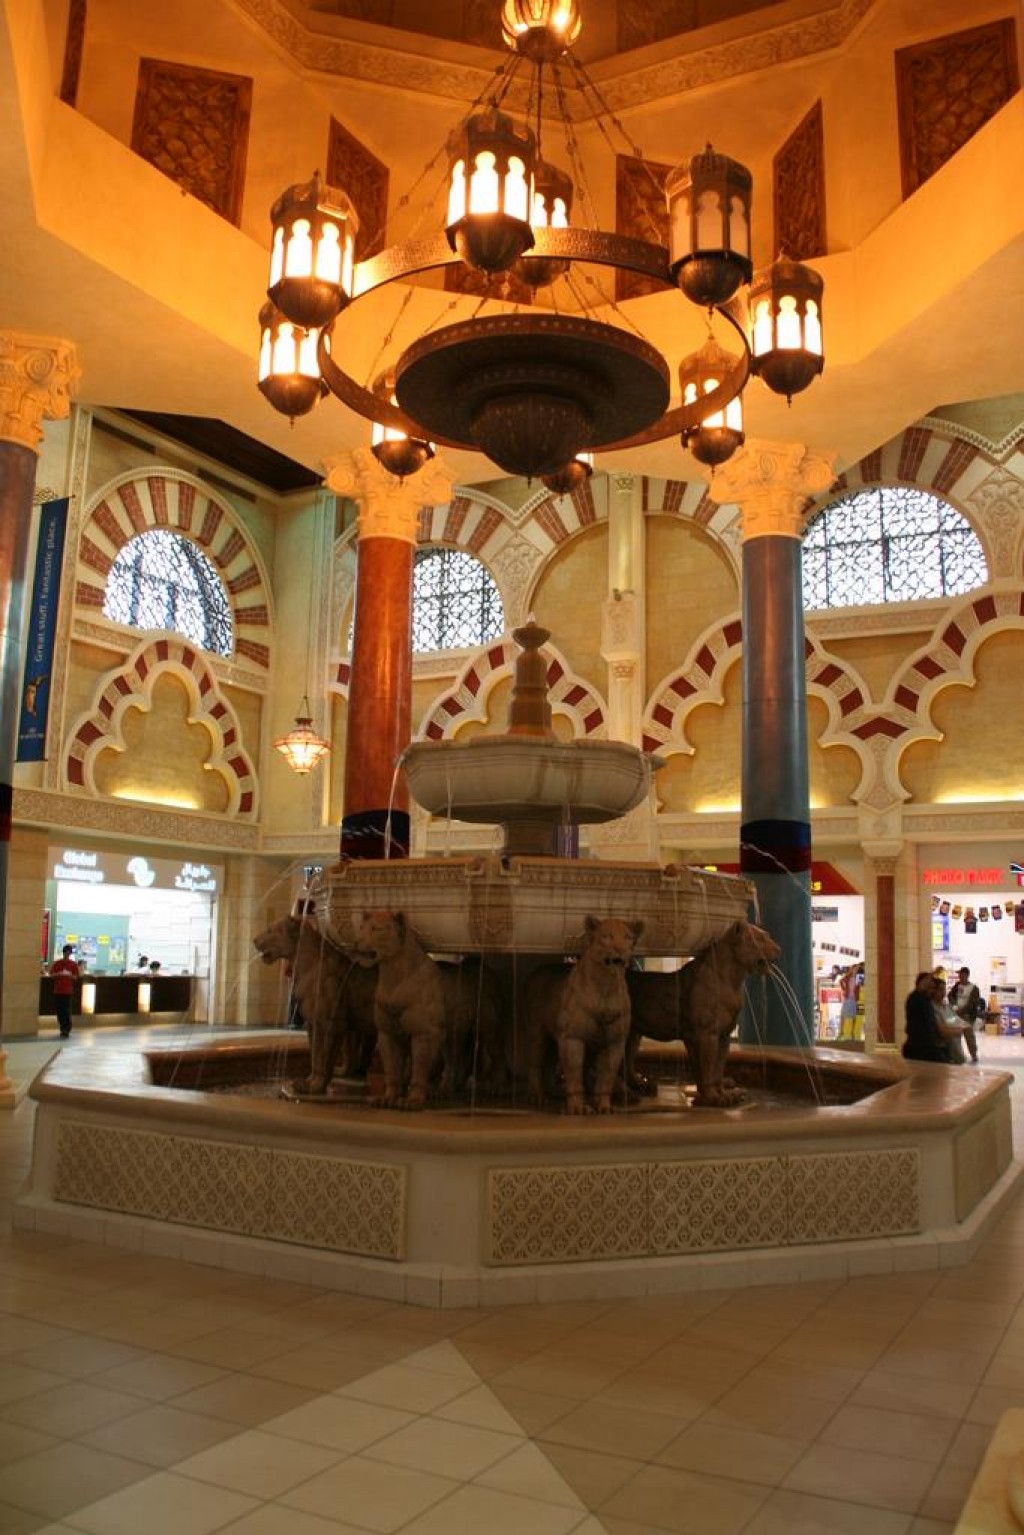 We visited the Ibn Battuta Shopping Mall, an amazing themed mall in Dubai.